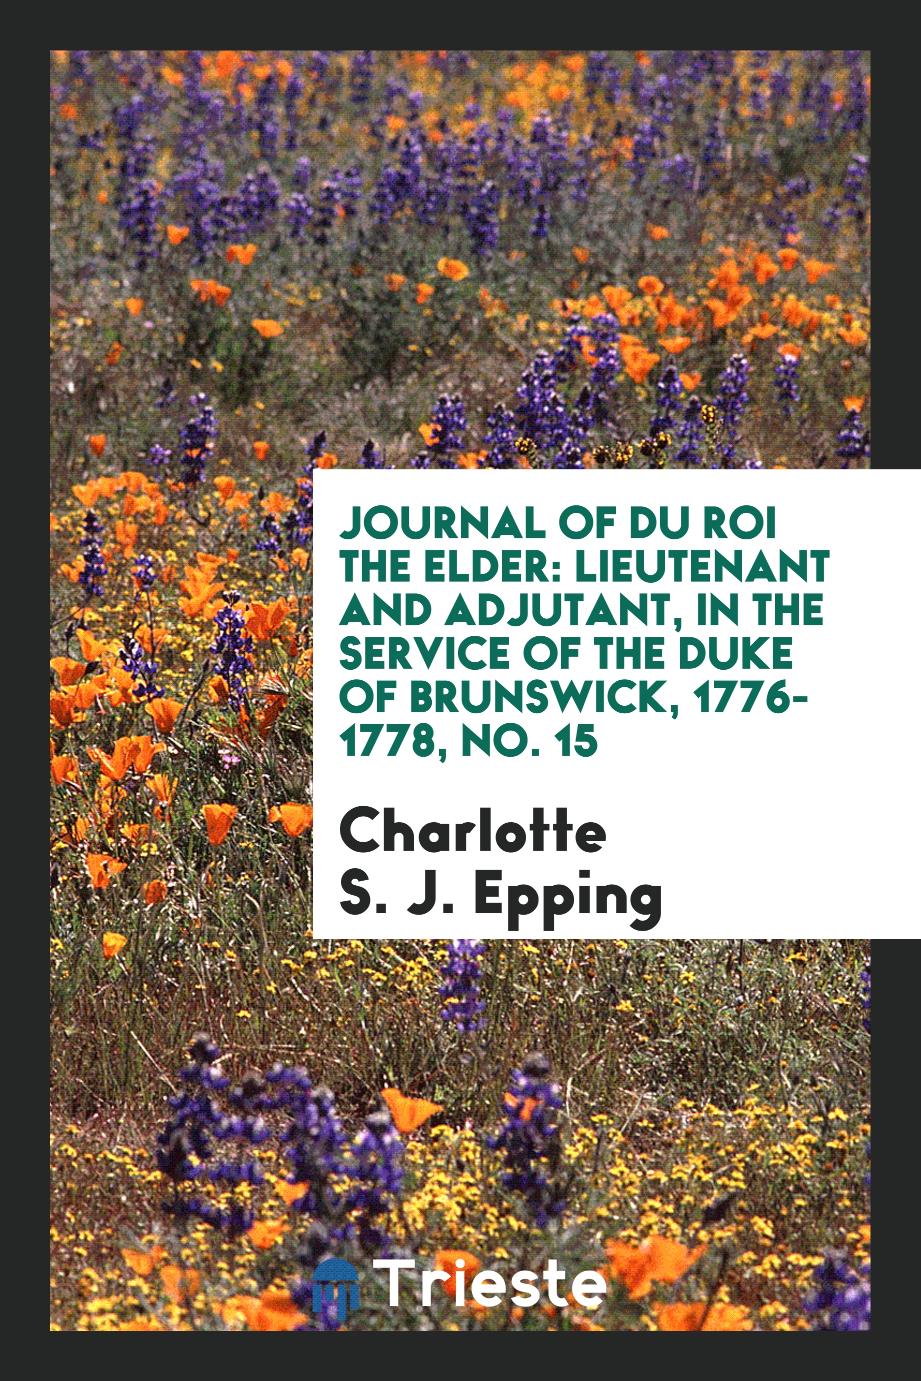 Journal of Du Roi the elder: lieutenant and adjutant, in the service of the Duke of Brunswick, 1776-1778, No. 15